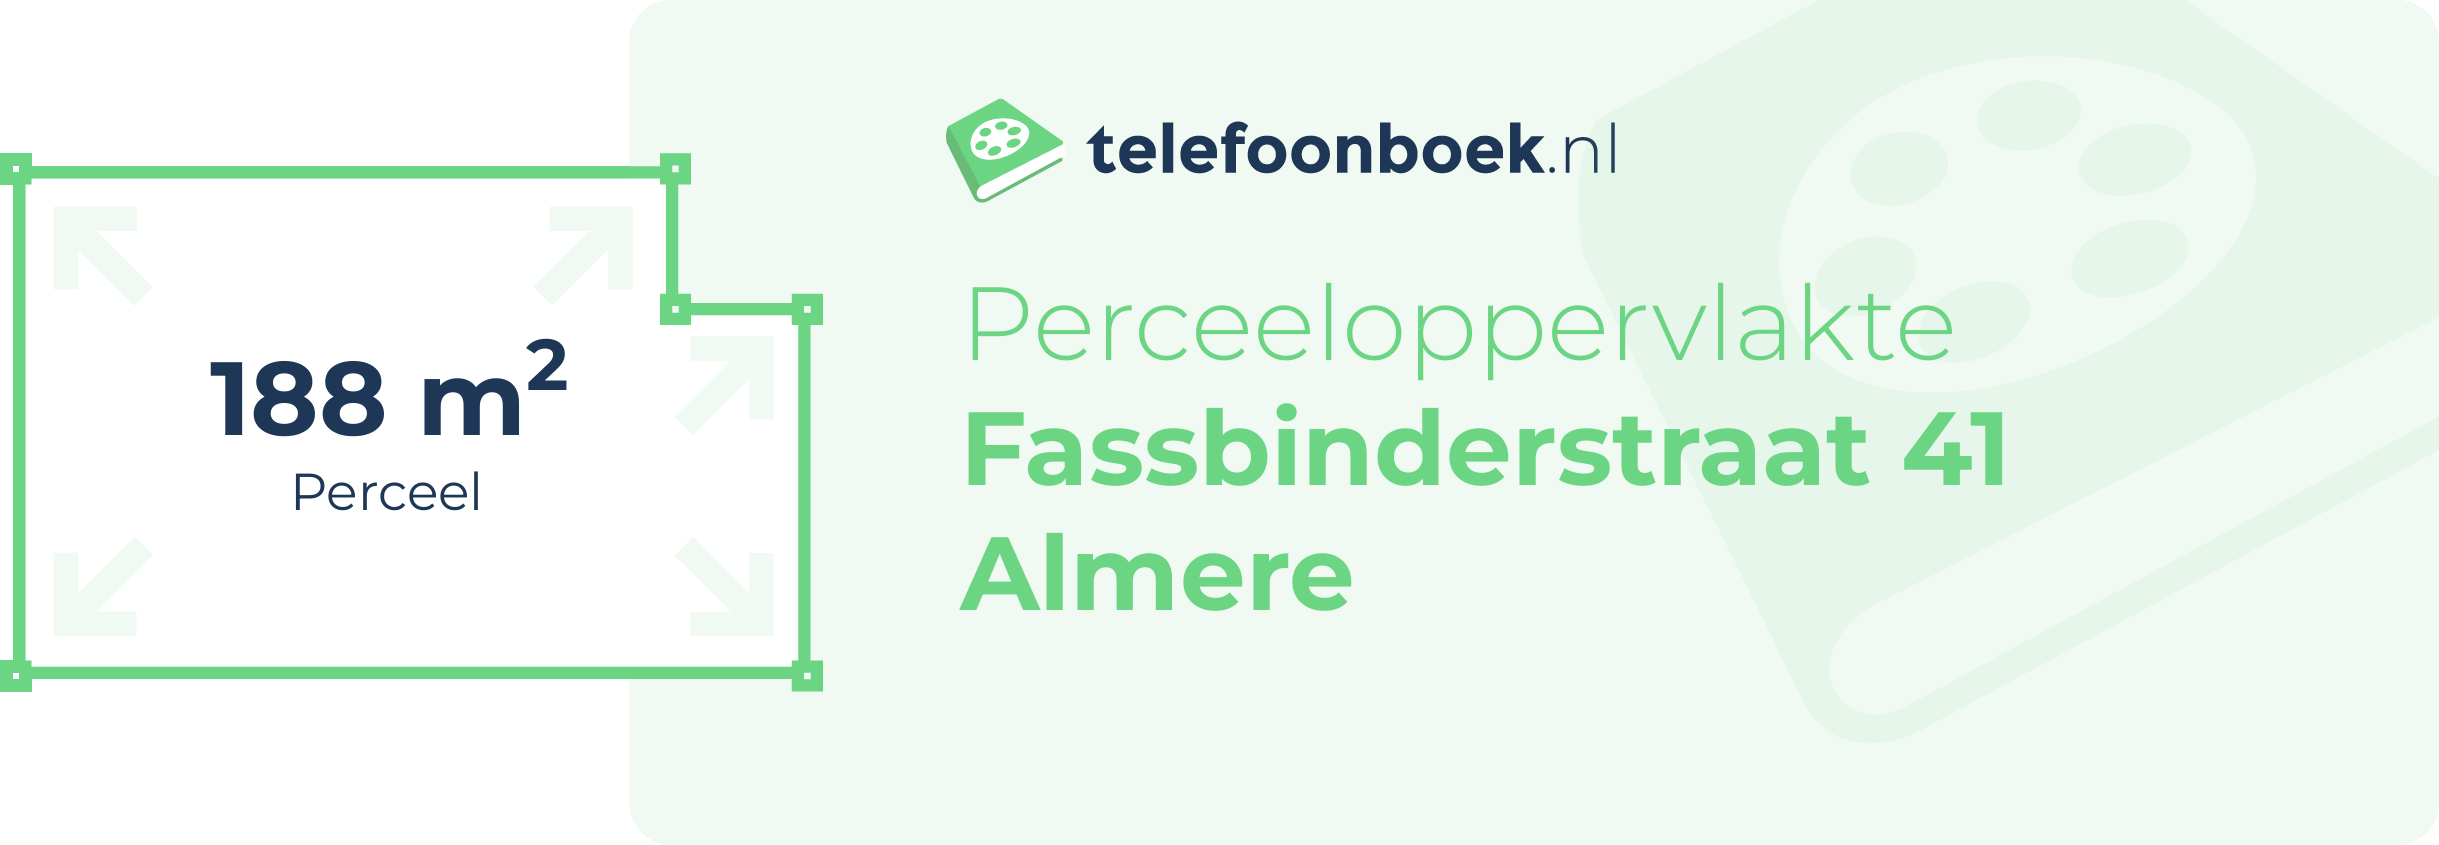 Perceeloppervlakte Fassbinderstraat 41 Almere